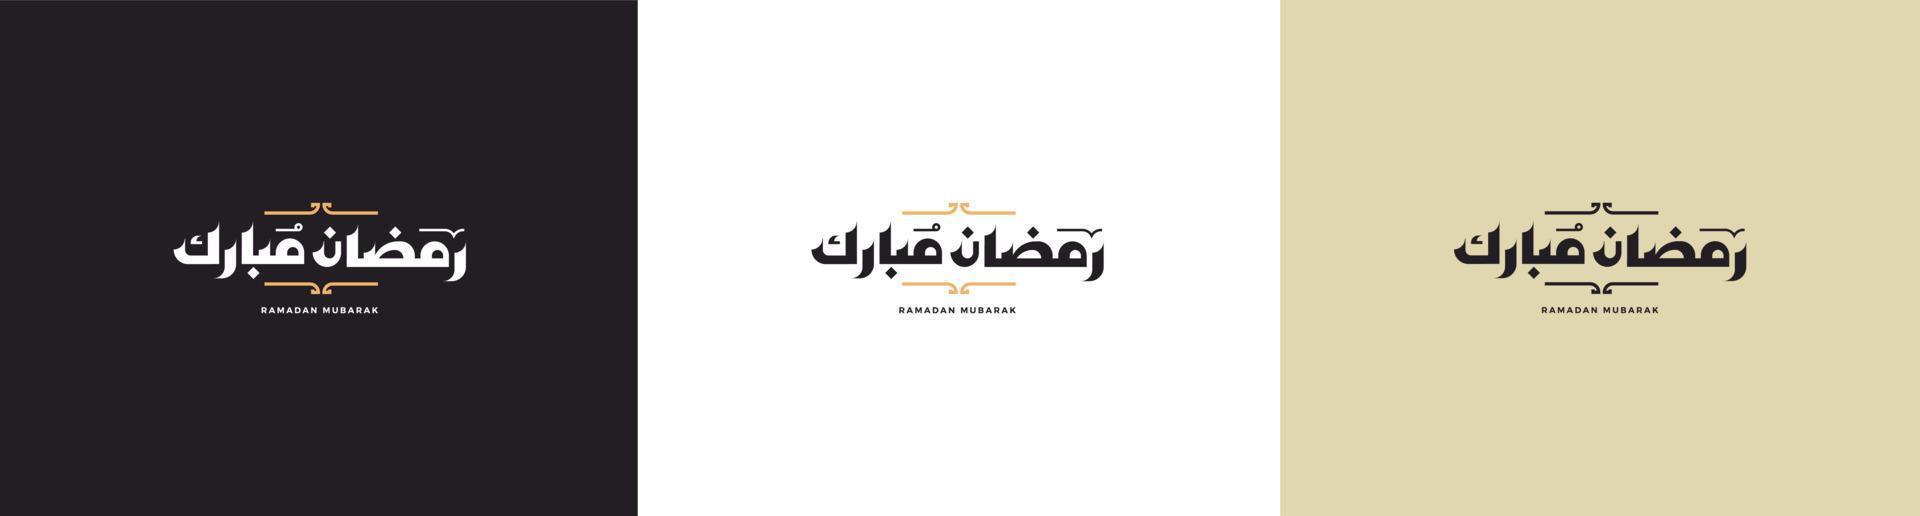 Ramadan Kareem. Ramadhan Mubarak. Translated Happy, Holy Ramadan. Month of fasting for Muslims. Arabic typography. vector